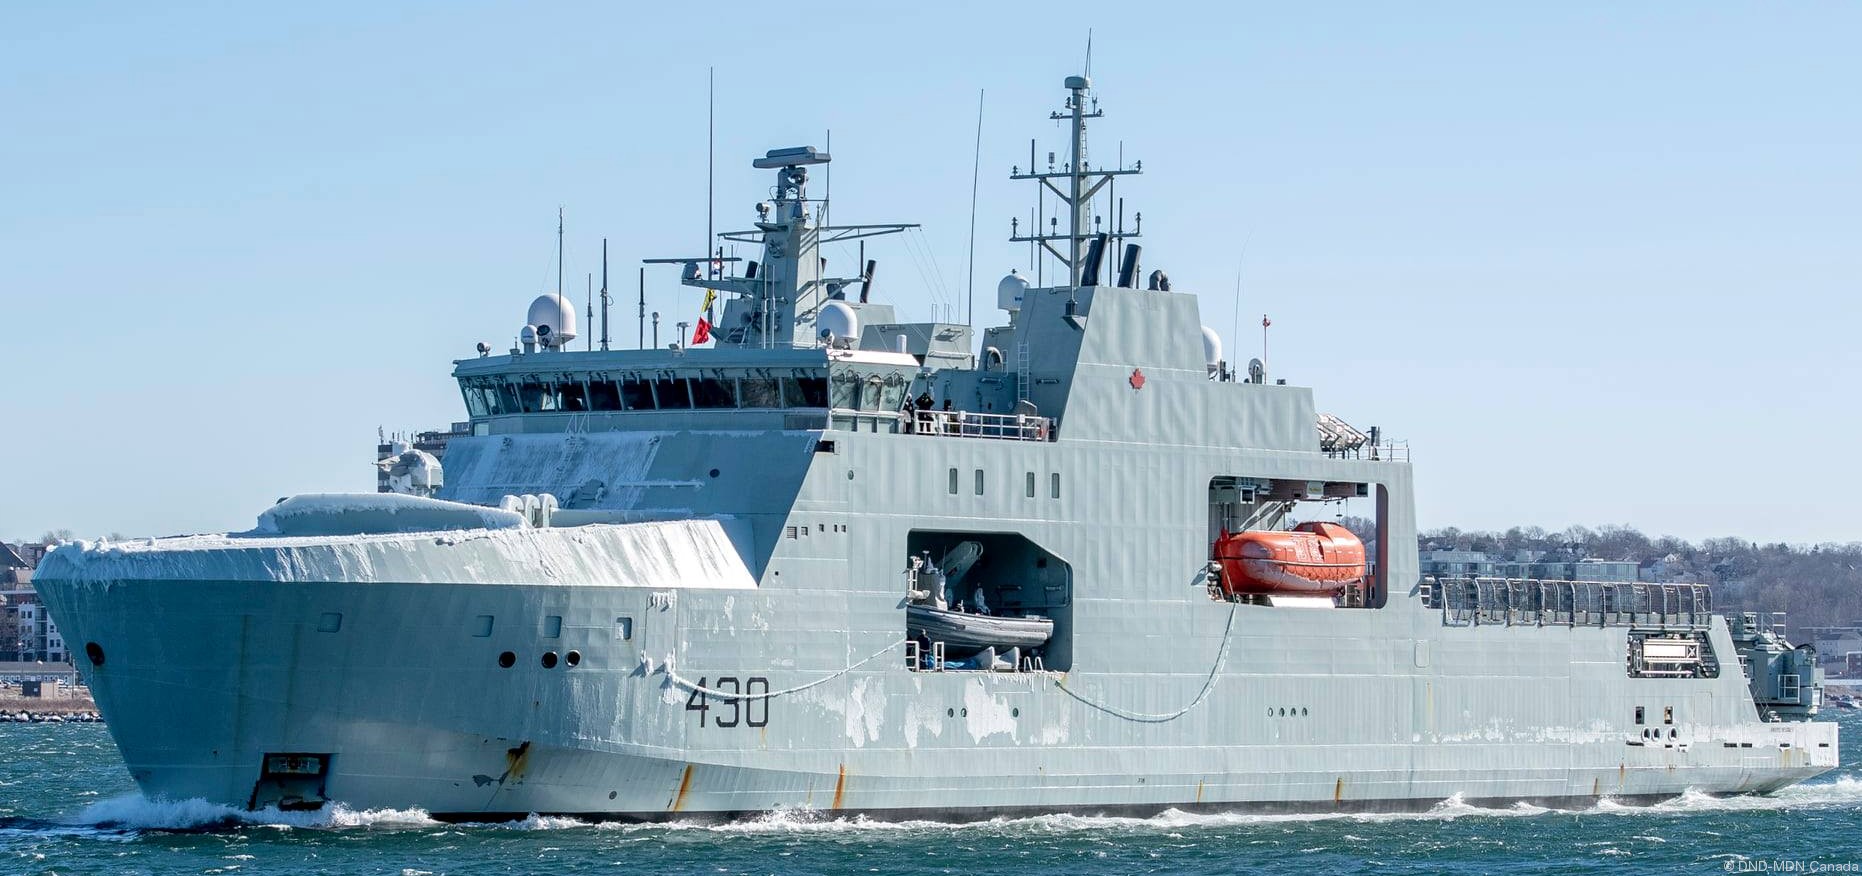 aopv-430 hmcs harry dewolf arctic offshore patrol vessel ncsm royal canadian navy 37